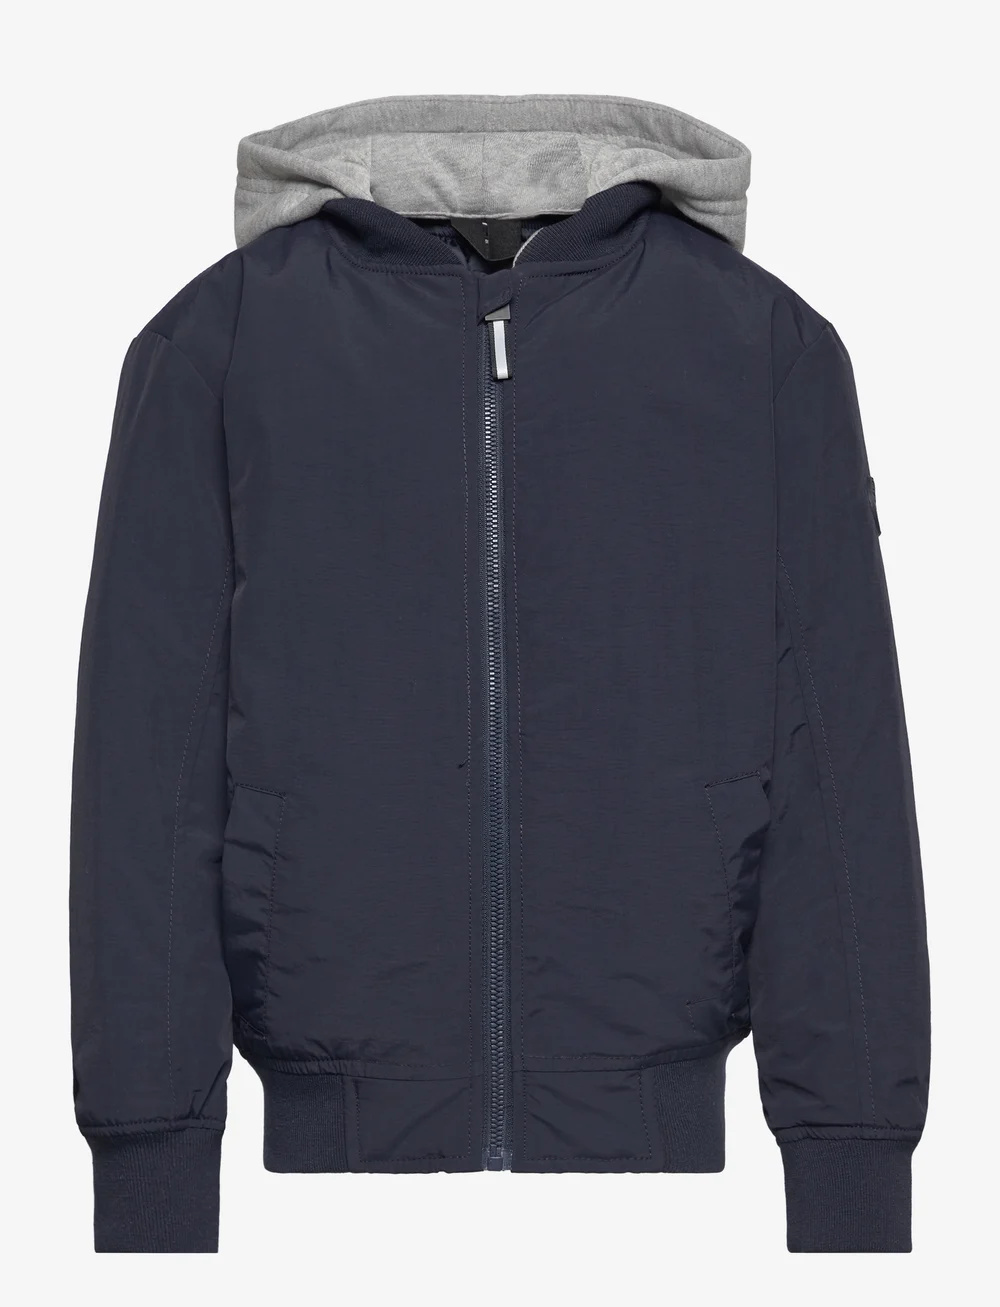 Tom Tailor Bomber Jacket – jackets – shop at Booztlet